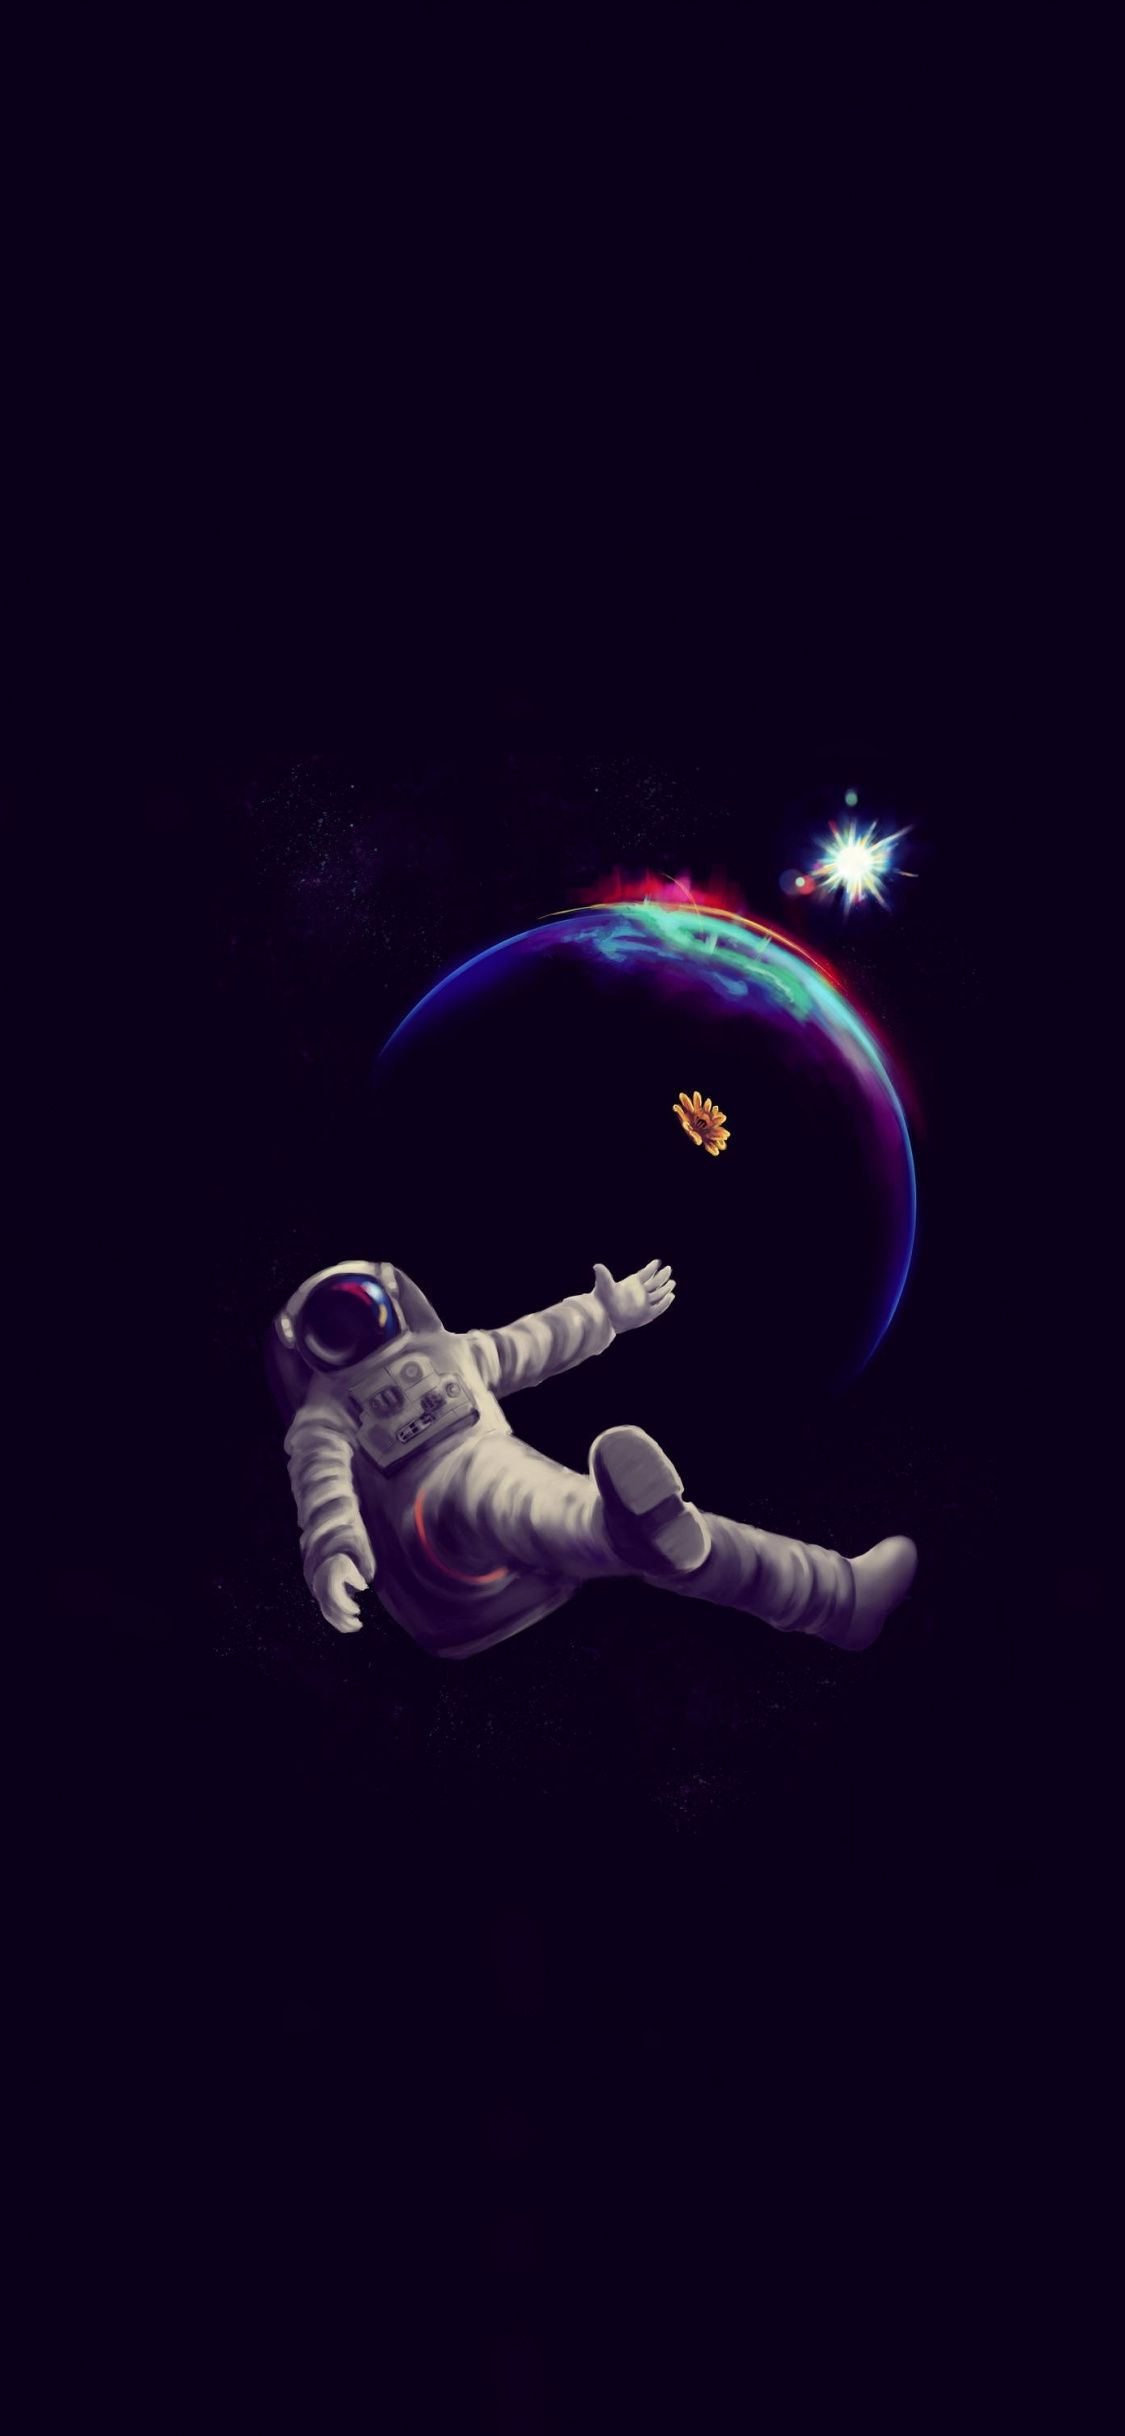 Astronaut iPhone Wallpaper Free .wallpaperaccess.com